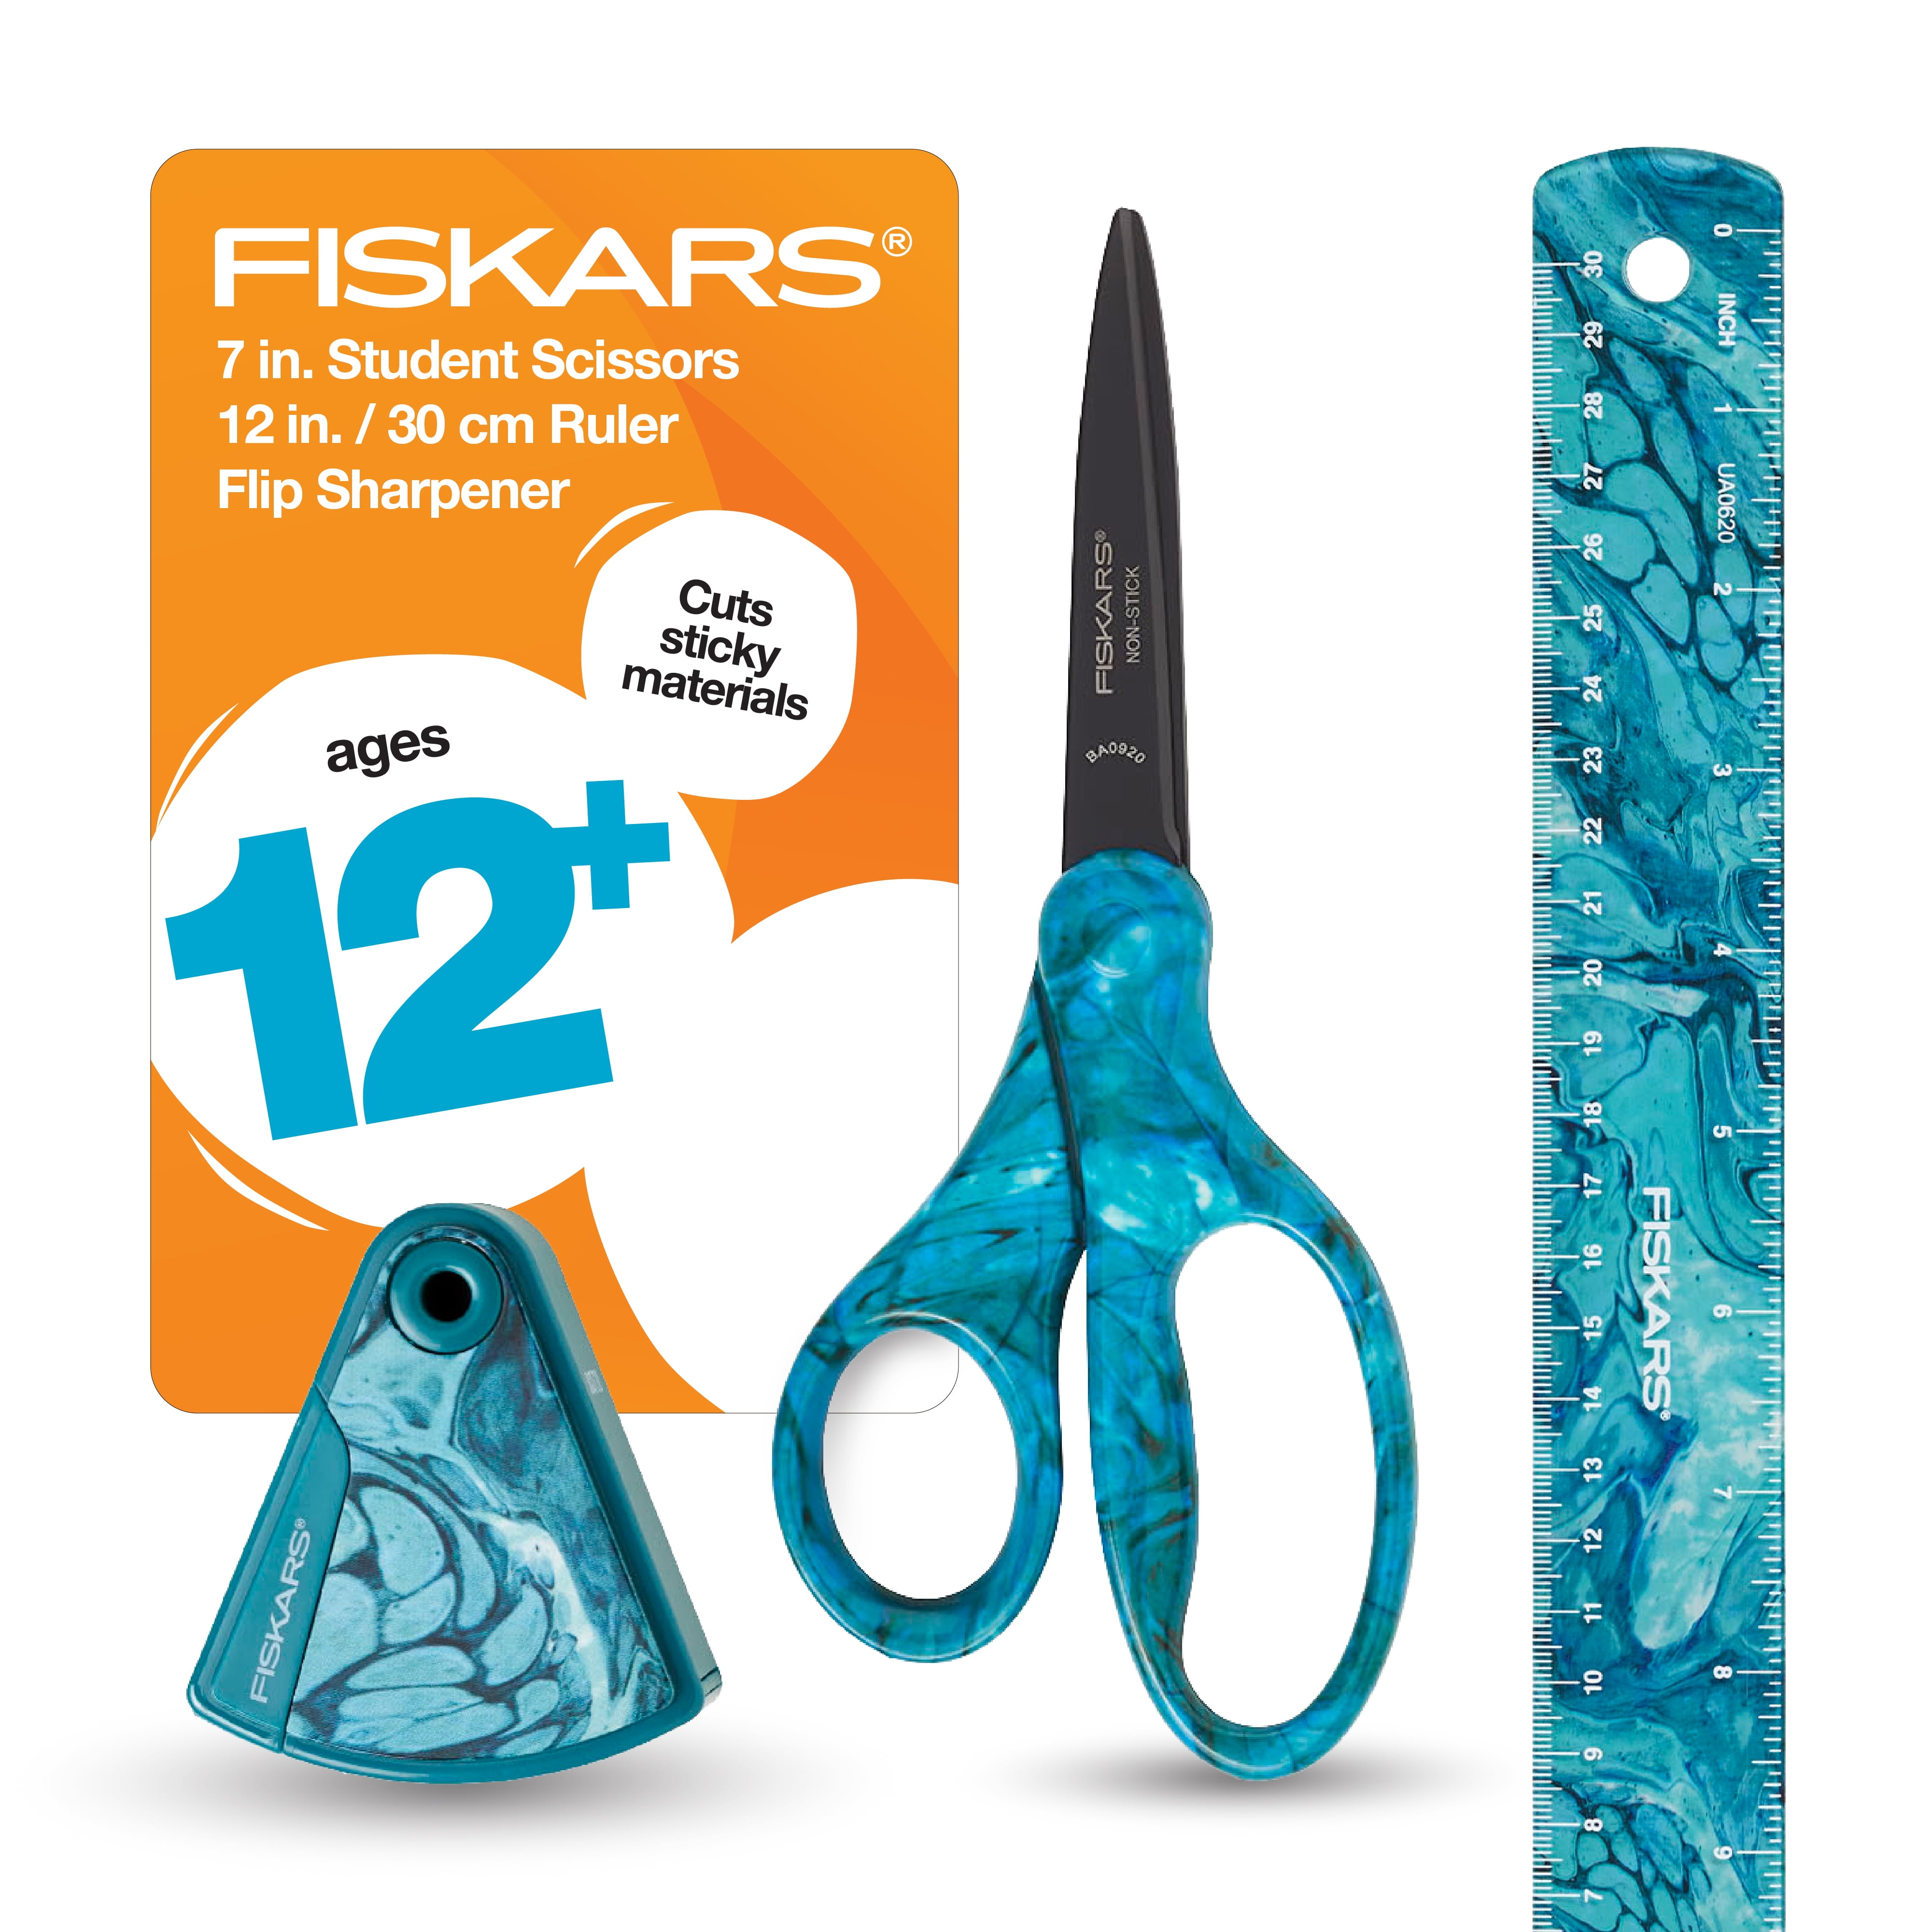 Fiskars Blunt-Tip Child Scissors - A Child's Dream